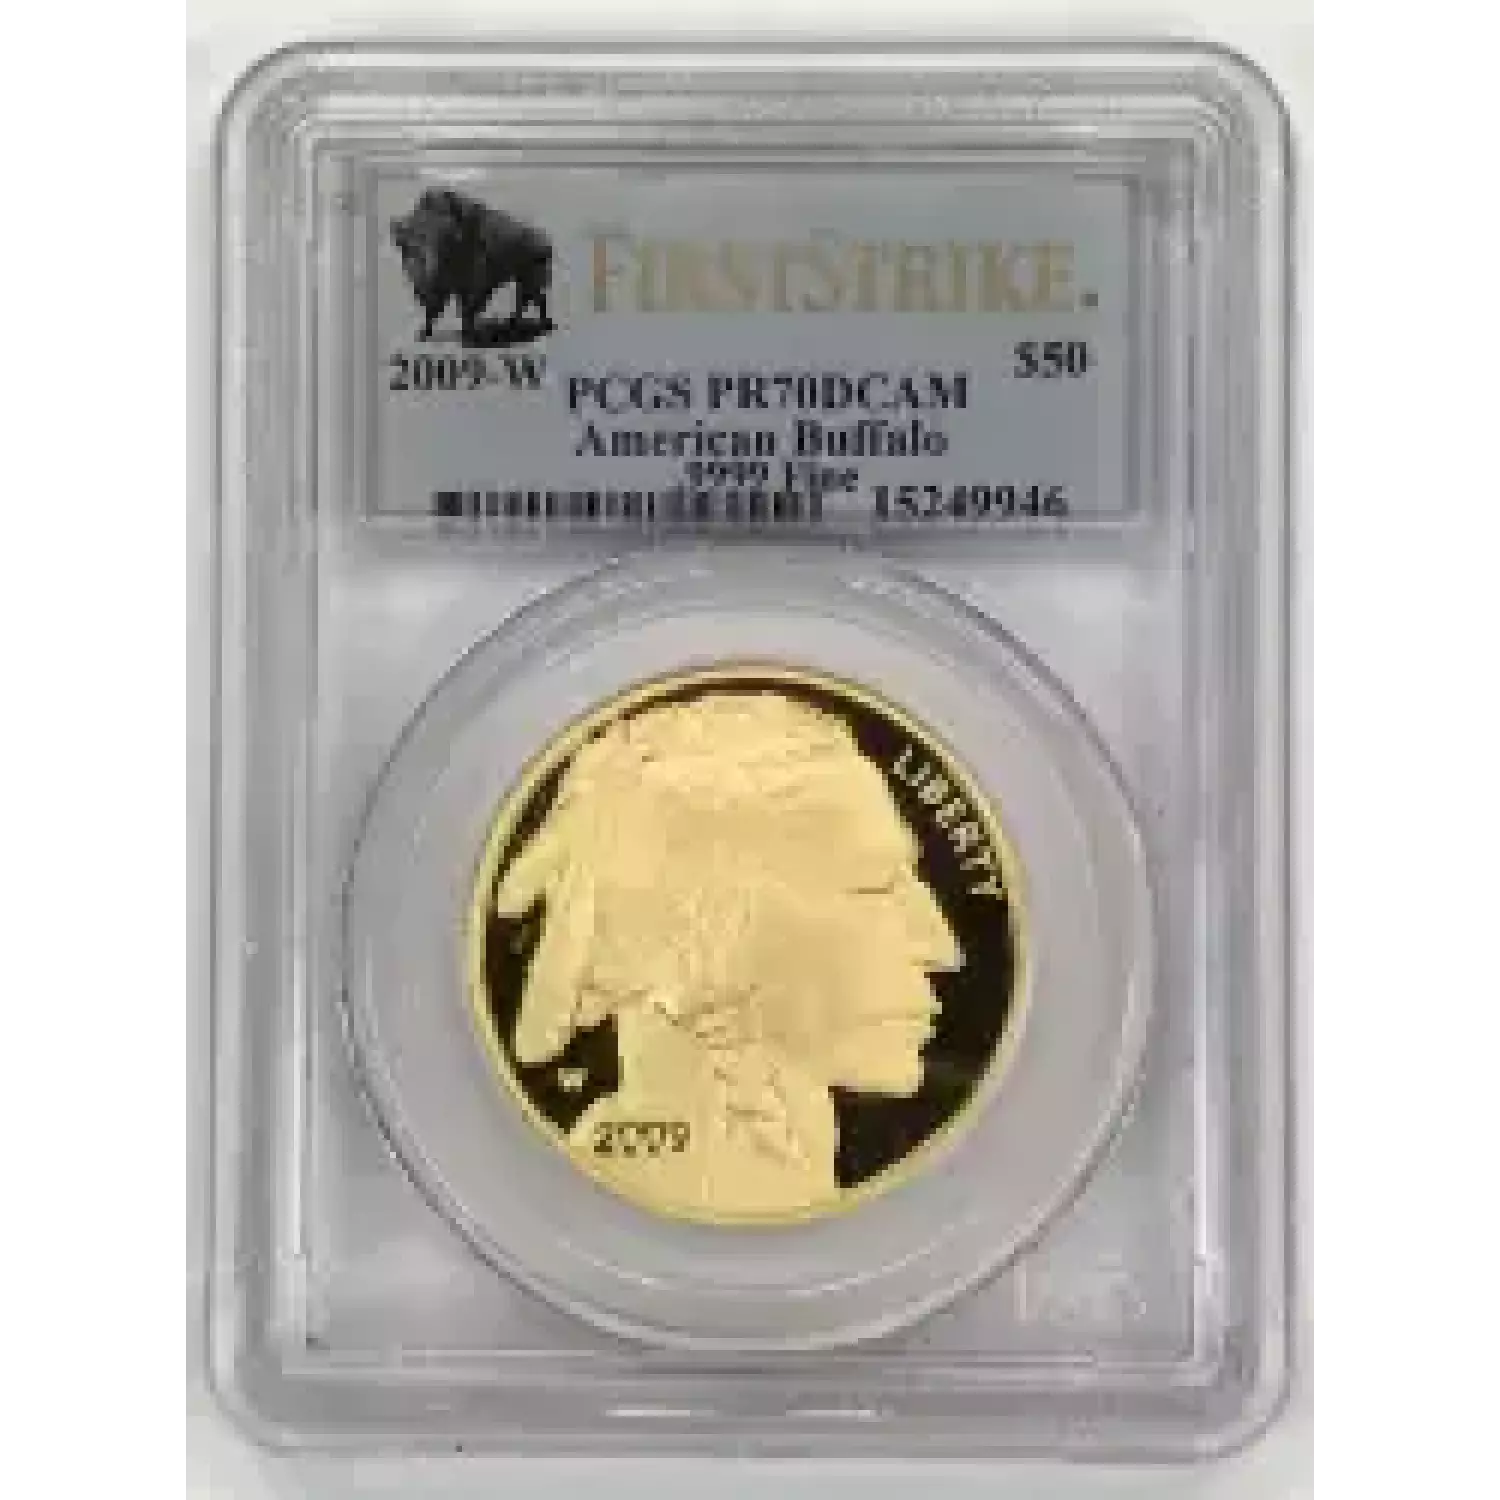 2009-W $50 American Buffalo .9999 Fine Gold First Strike, DCAM